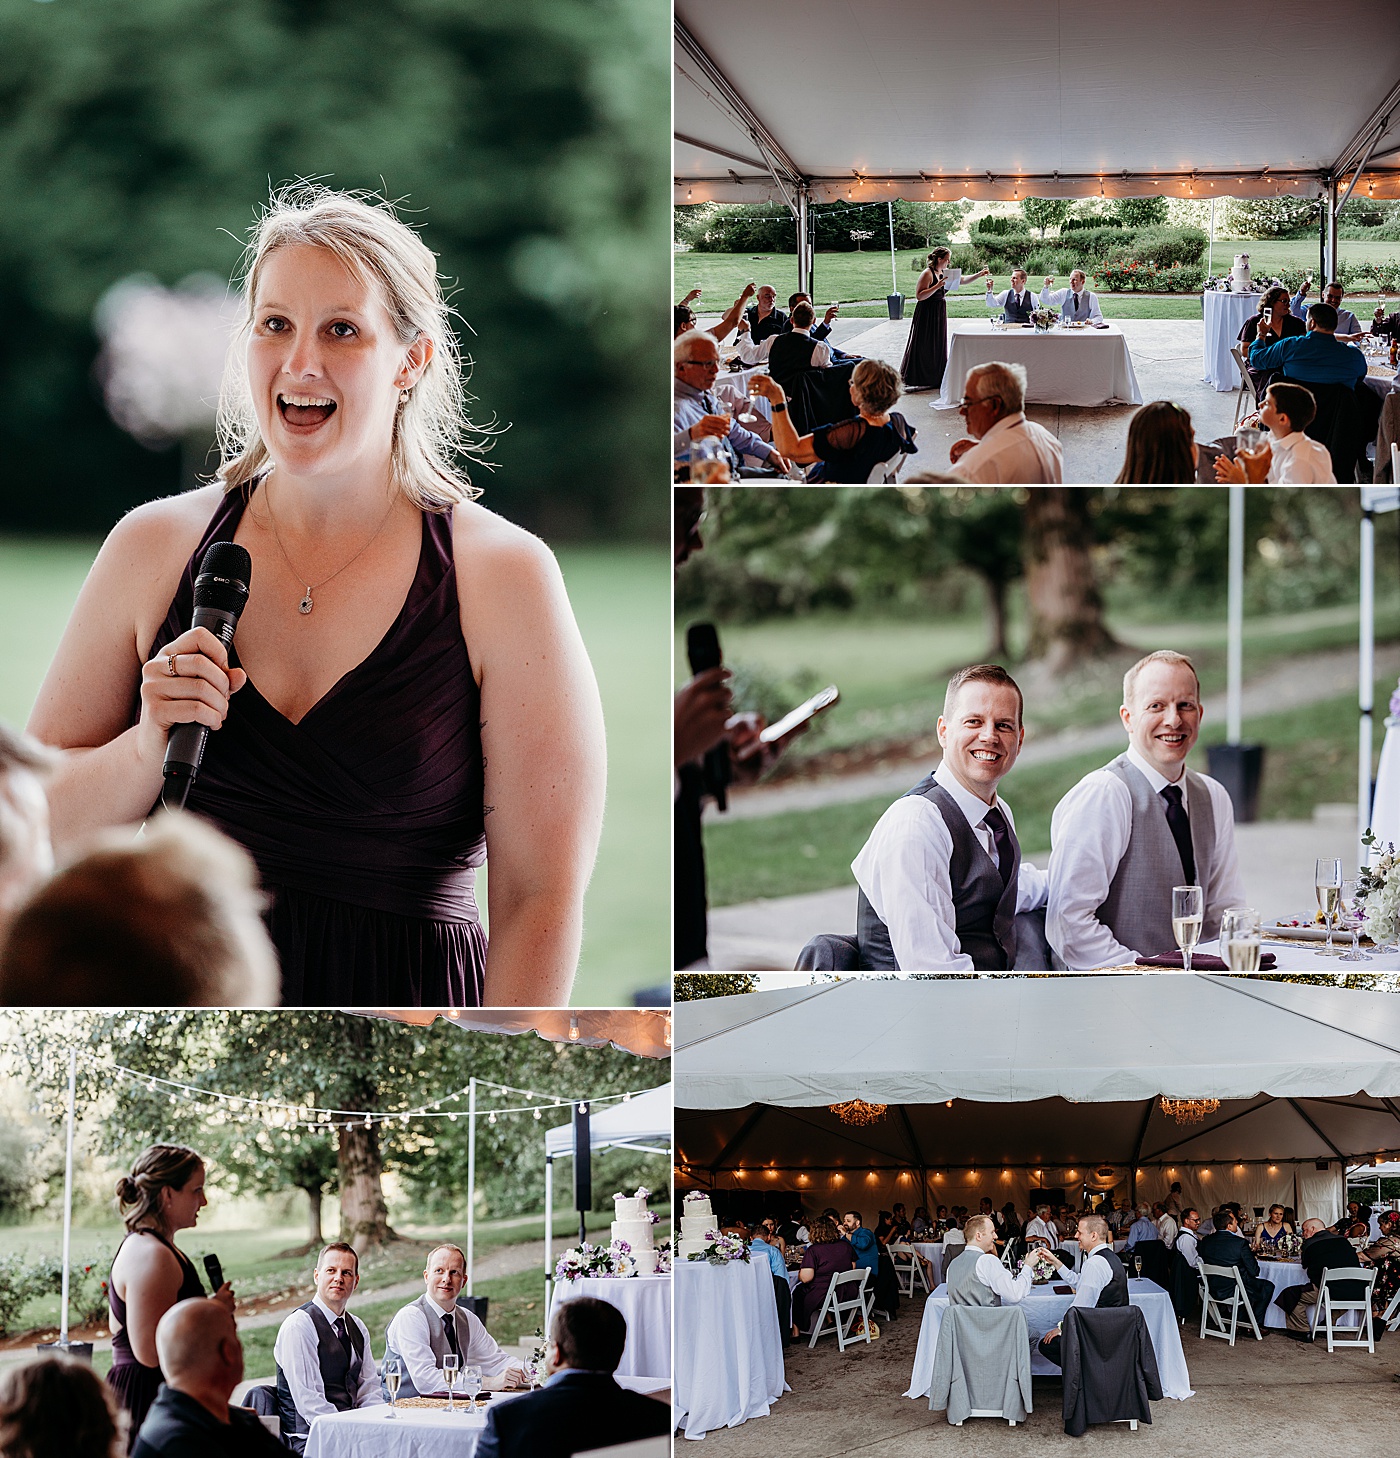 Toasts during wedding reception at Sanders Estate, a Washington state intimate wedding venue | Megan Montalvo Photography